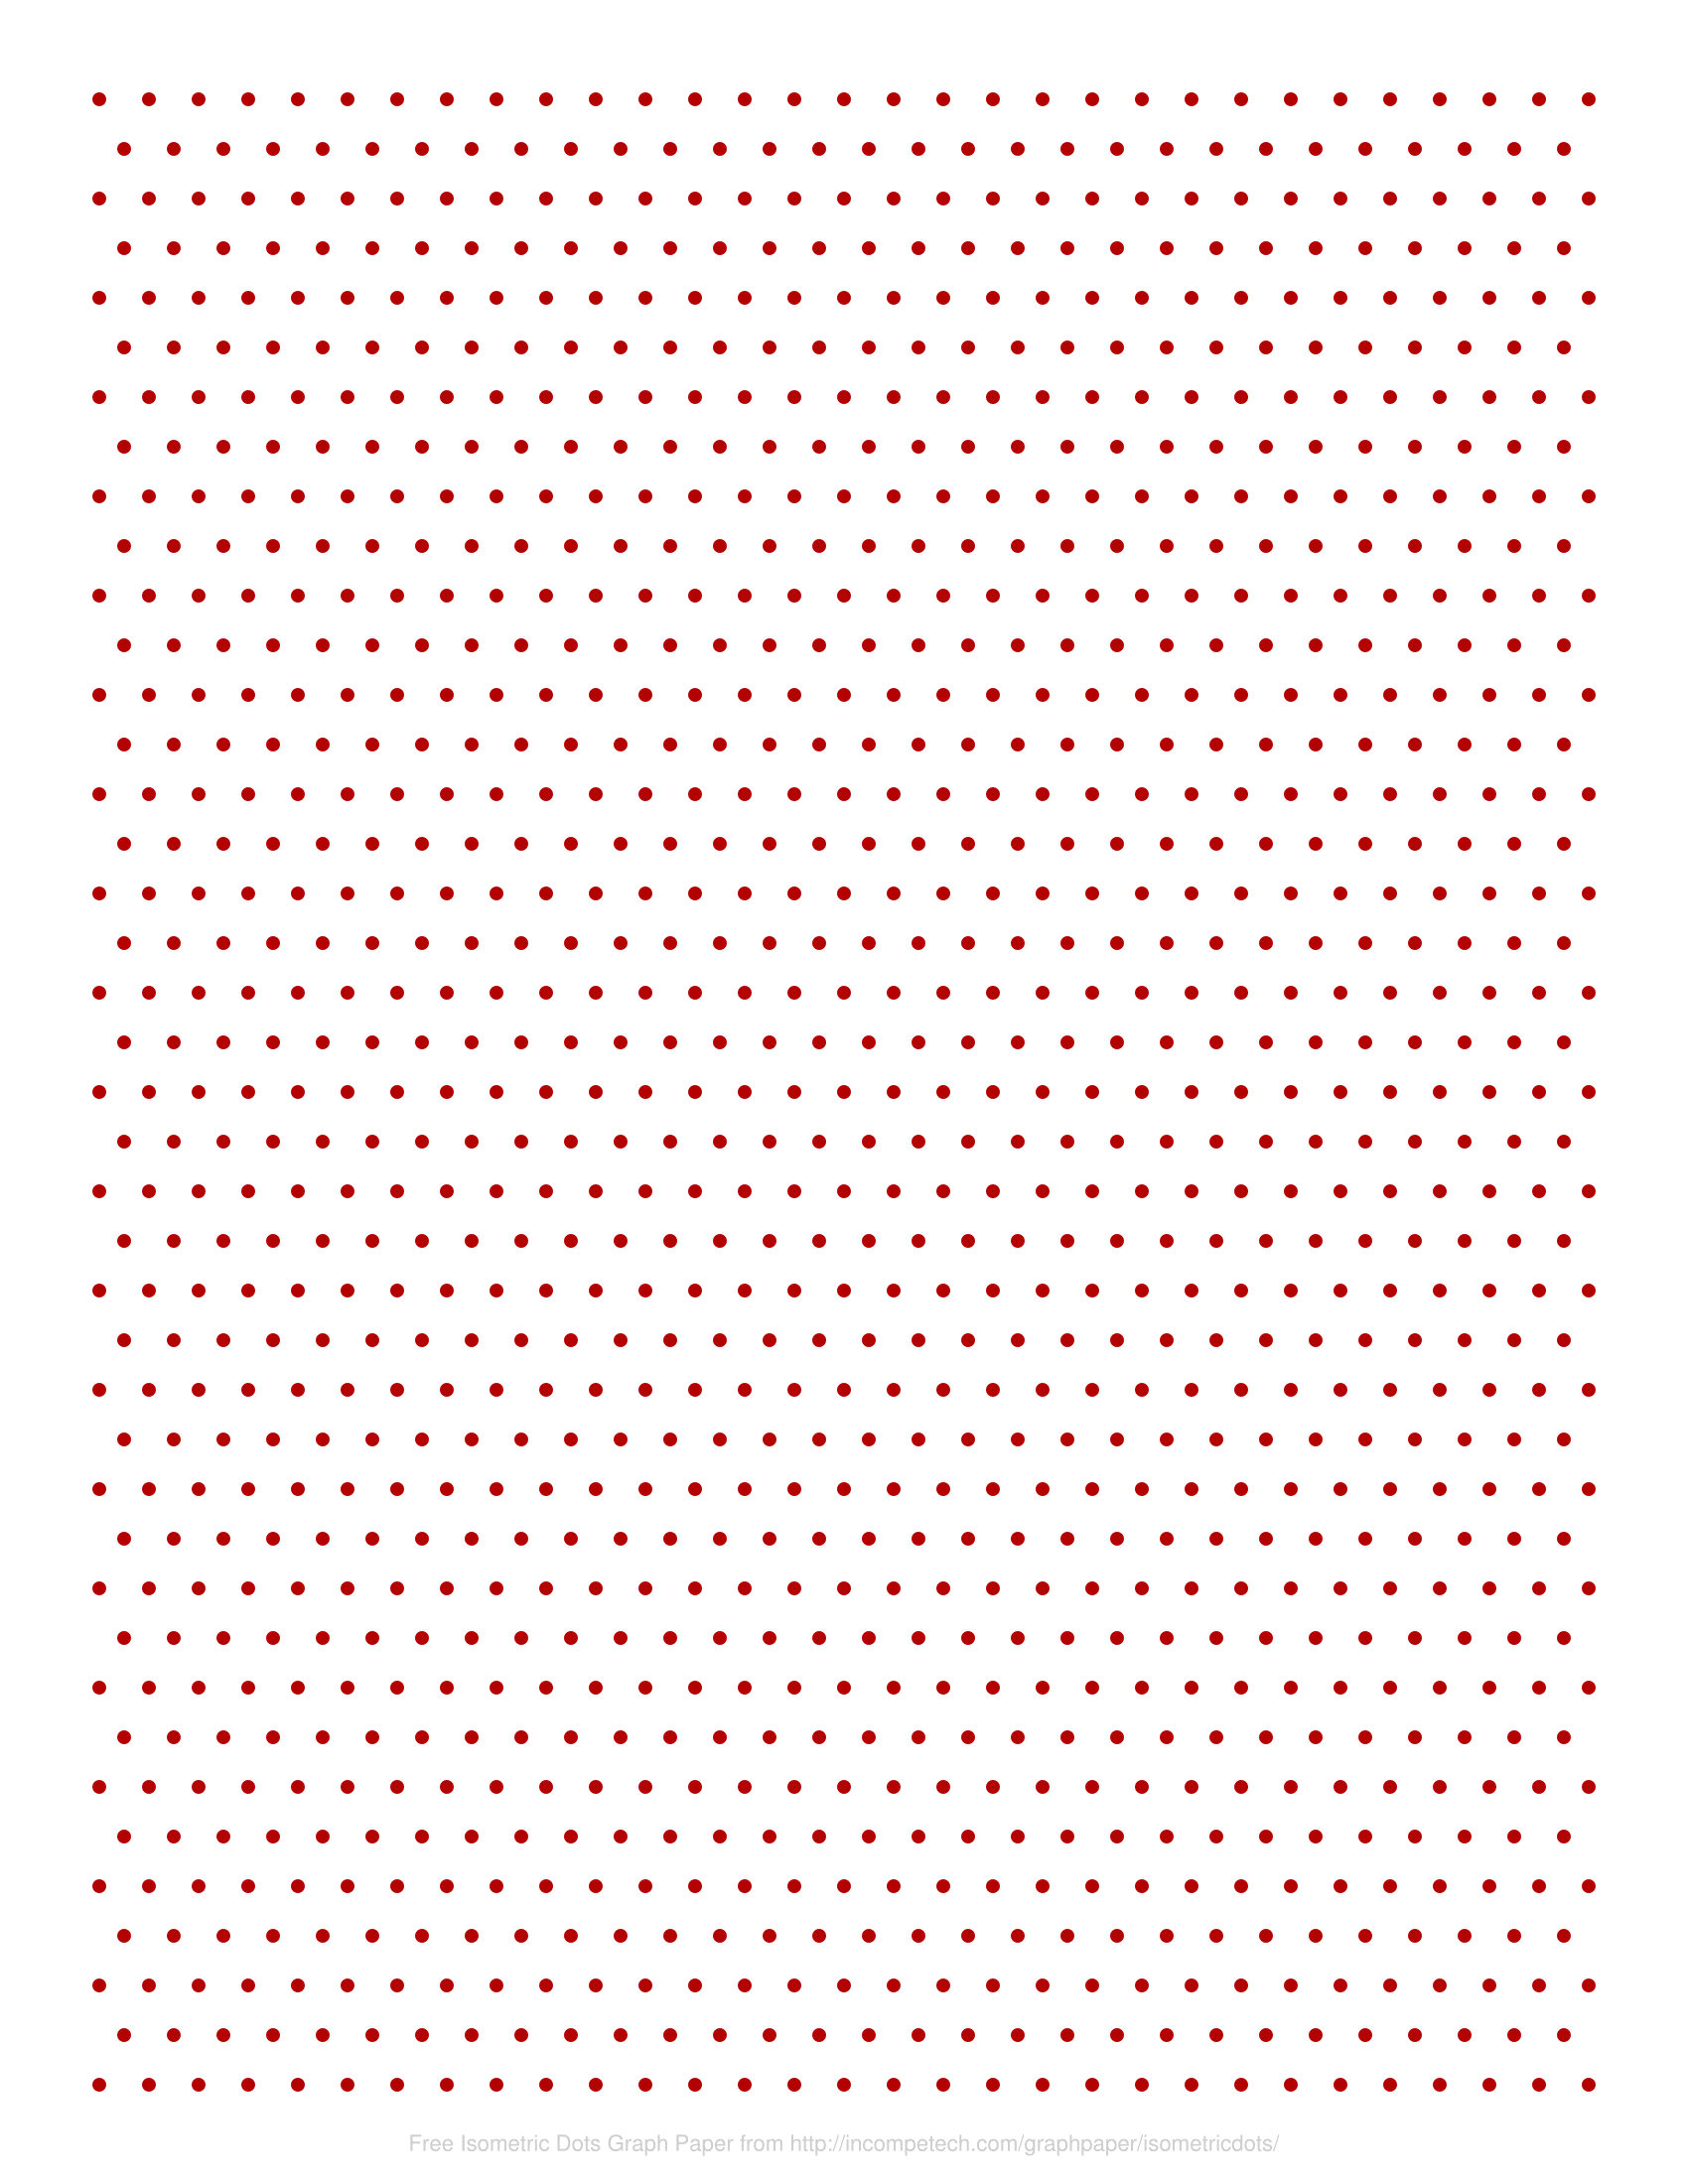 0.5 cm Isometric Dot Paper